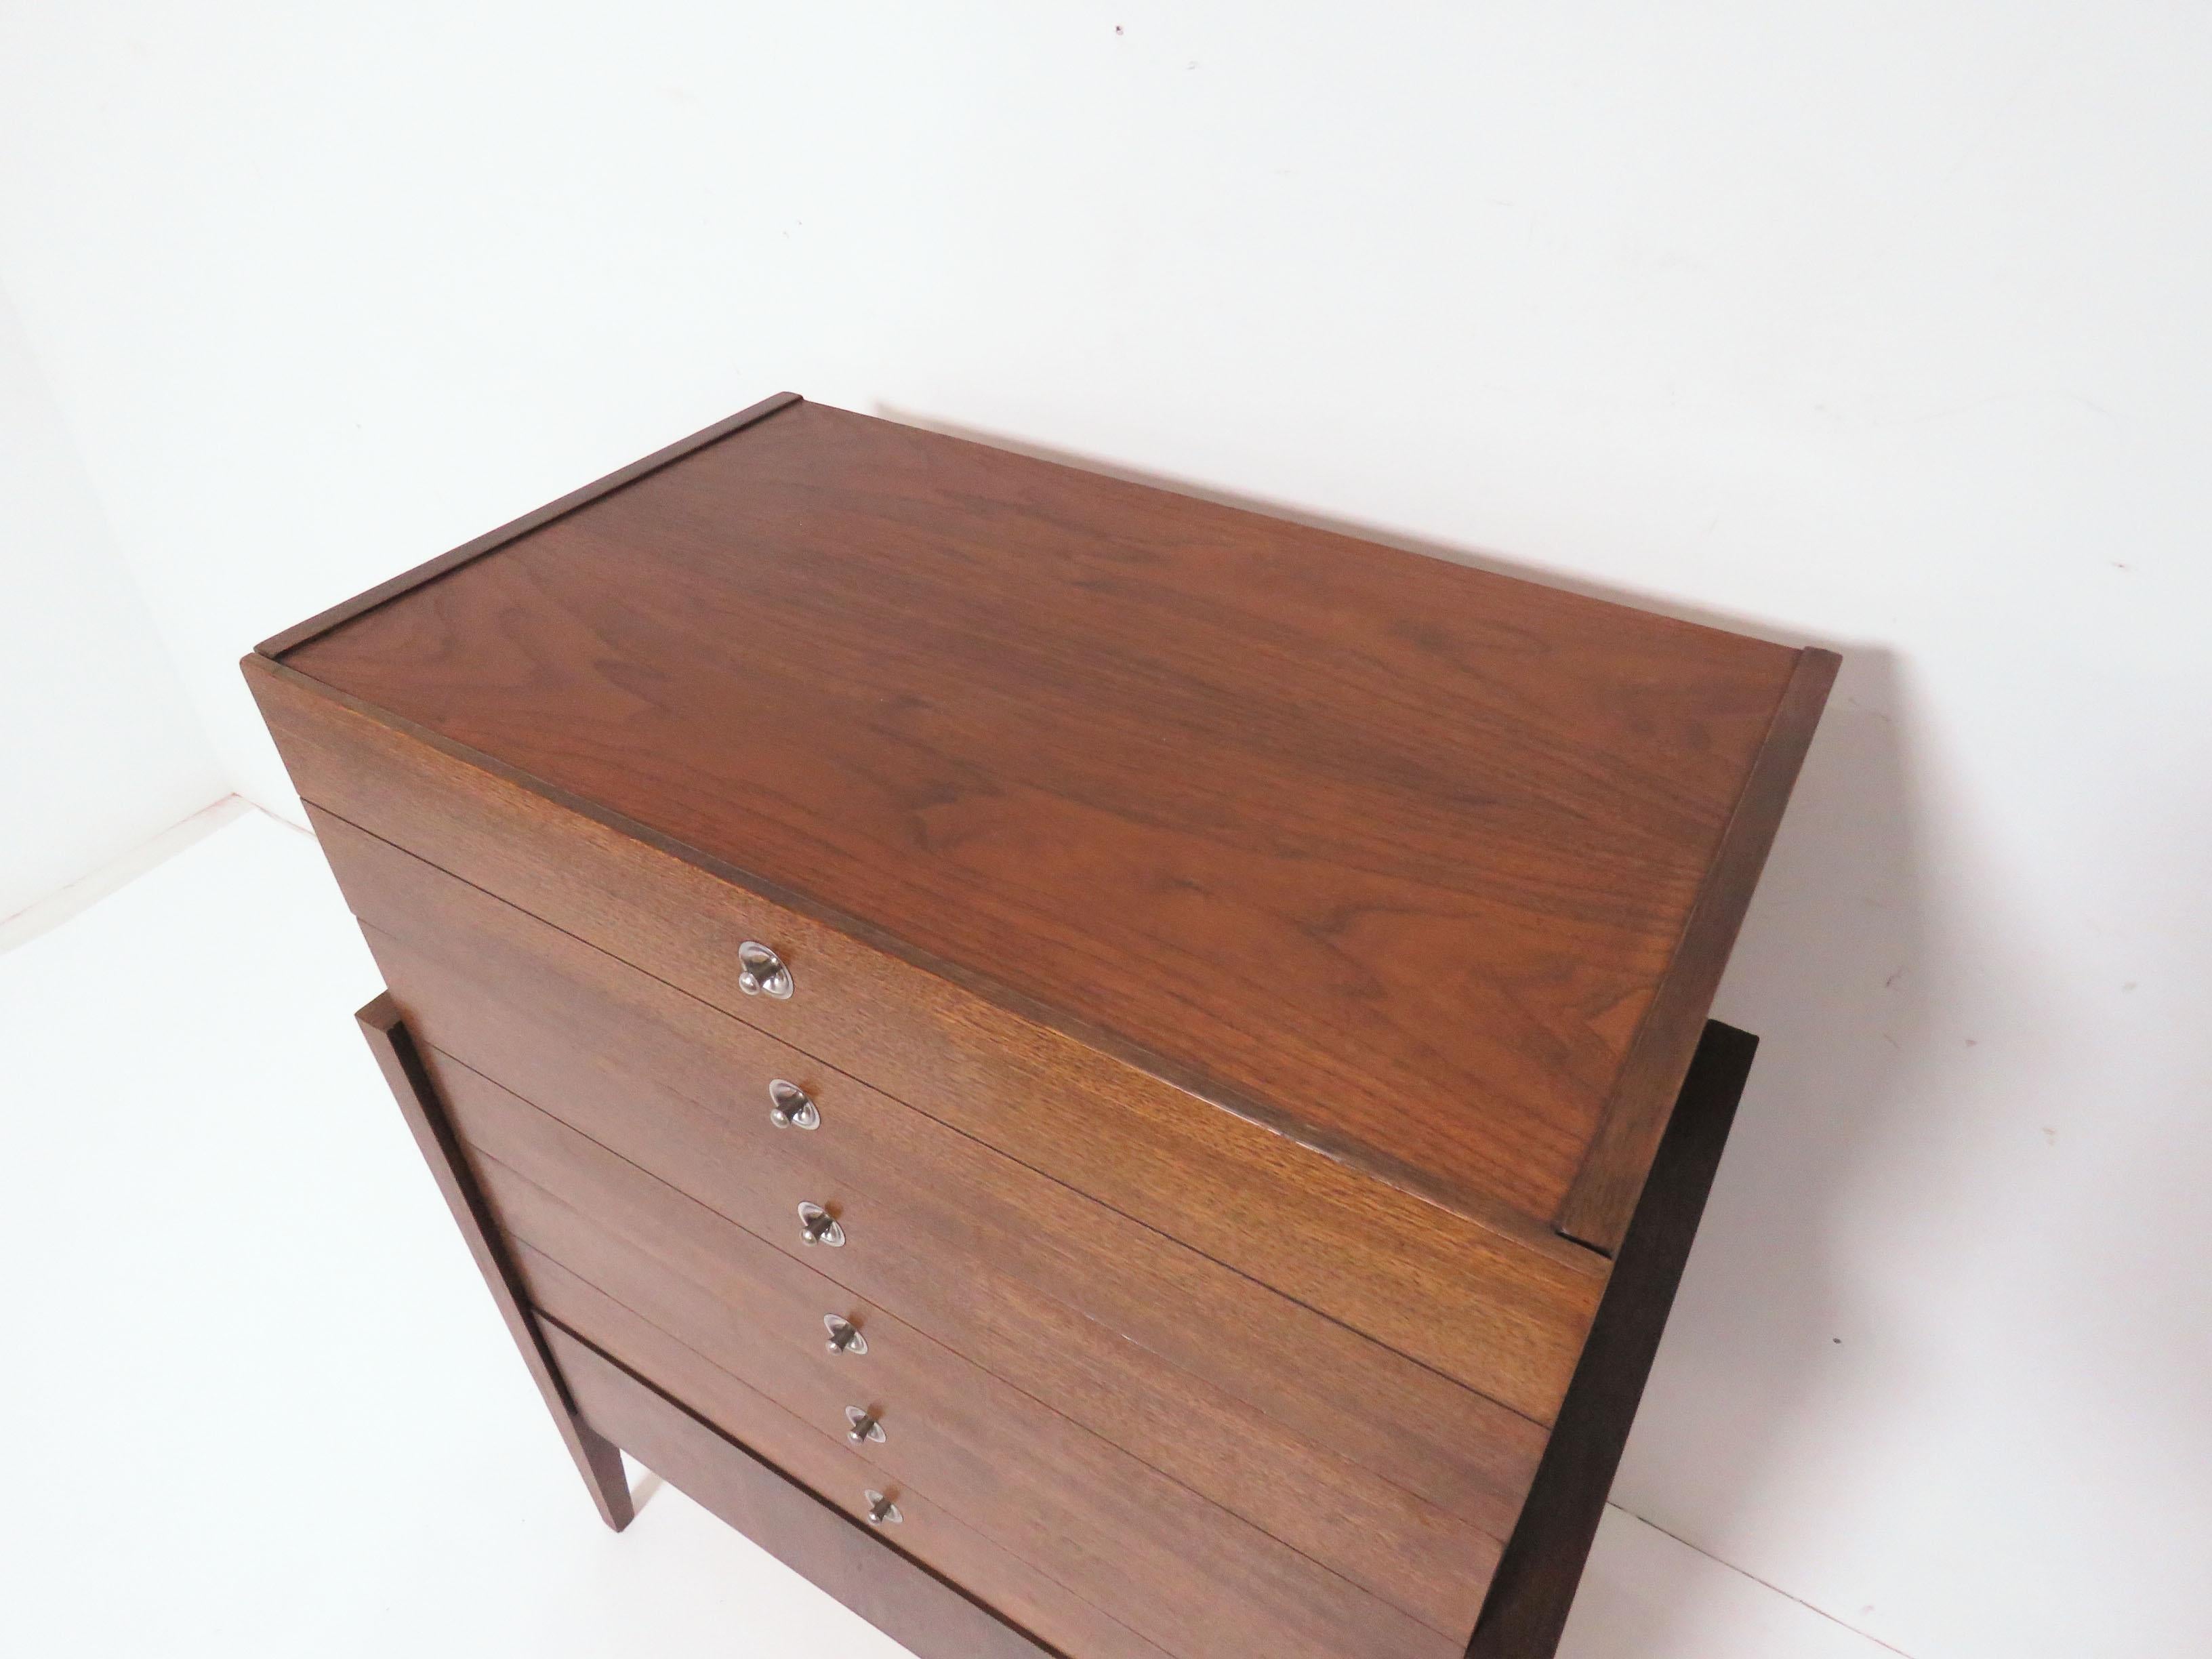 An Art Deco inspired walnut highboy four-drawer chest of American origin, circa 1950s.